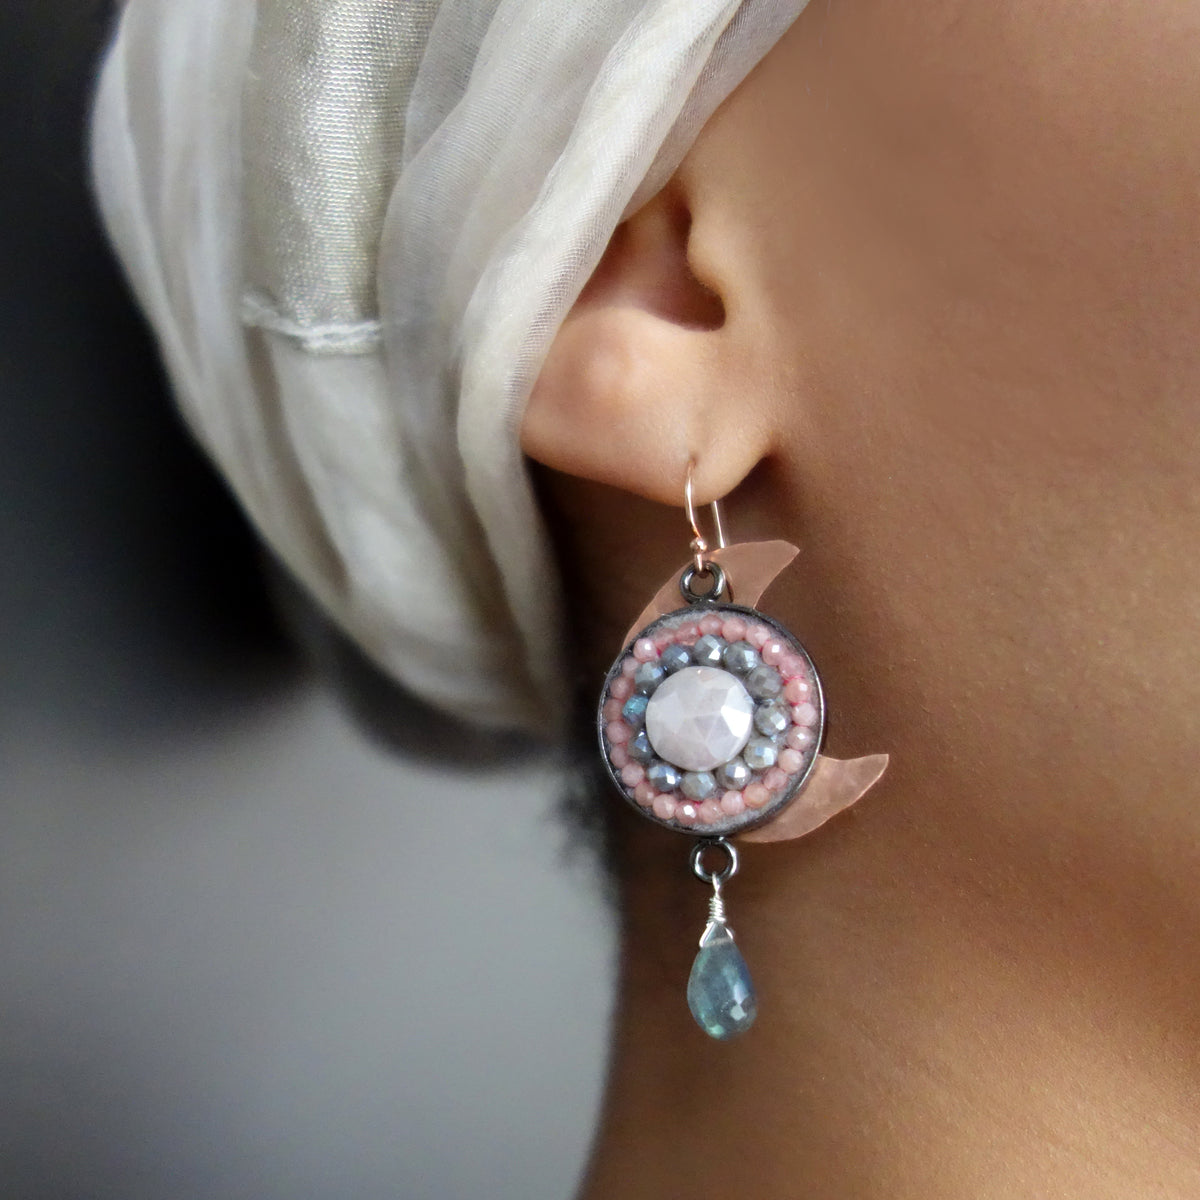 Silverite, Peach Moonstone, and Copper Moon Mosaic ear